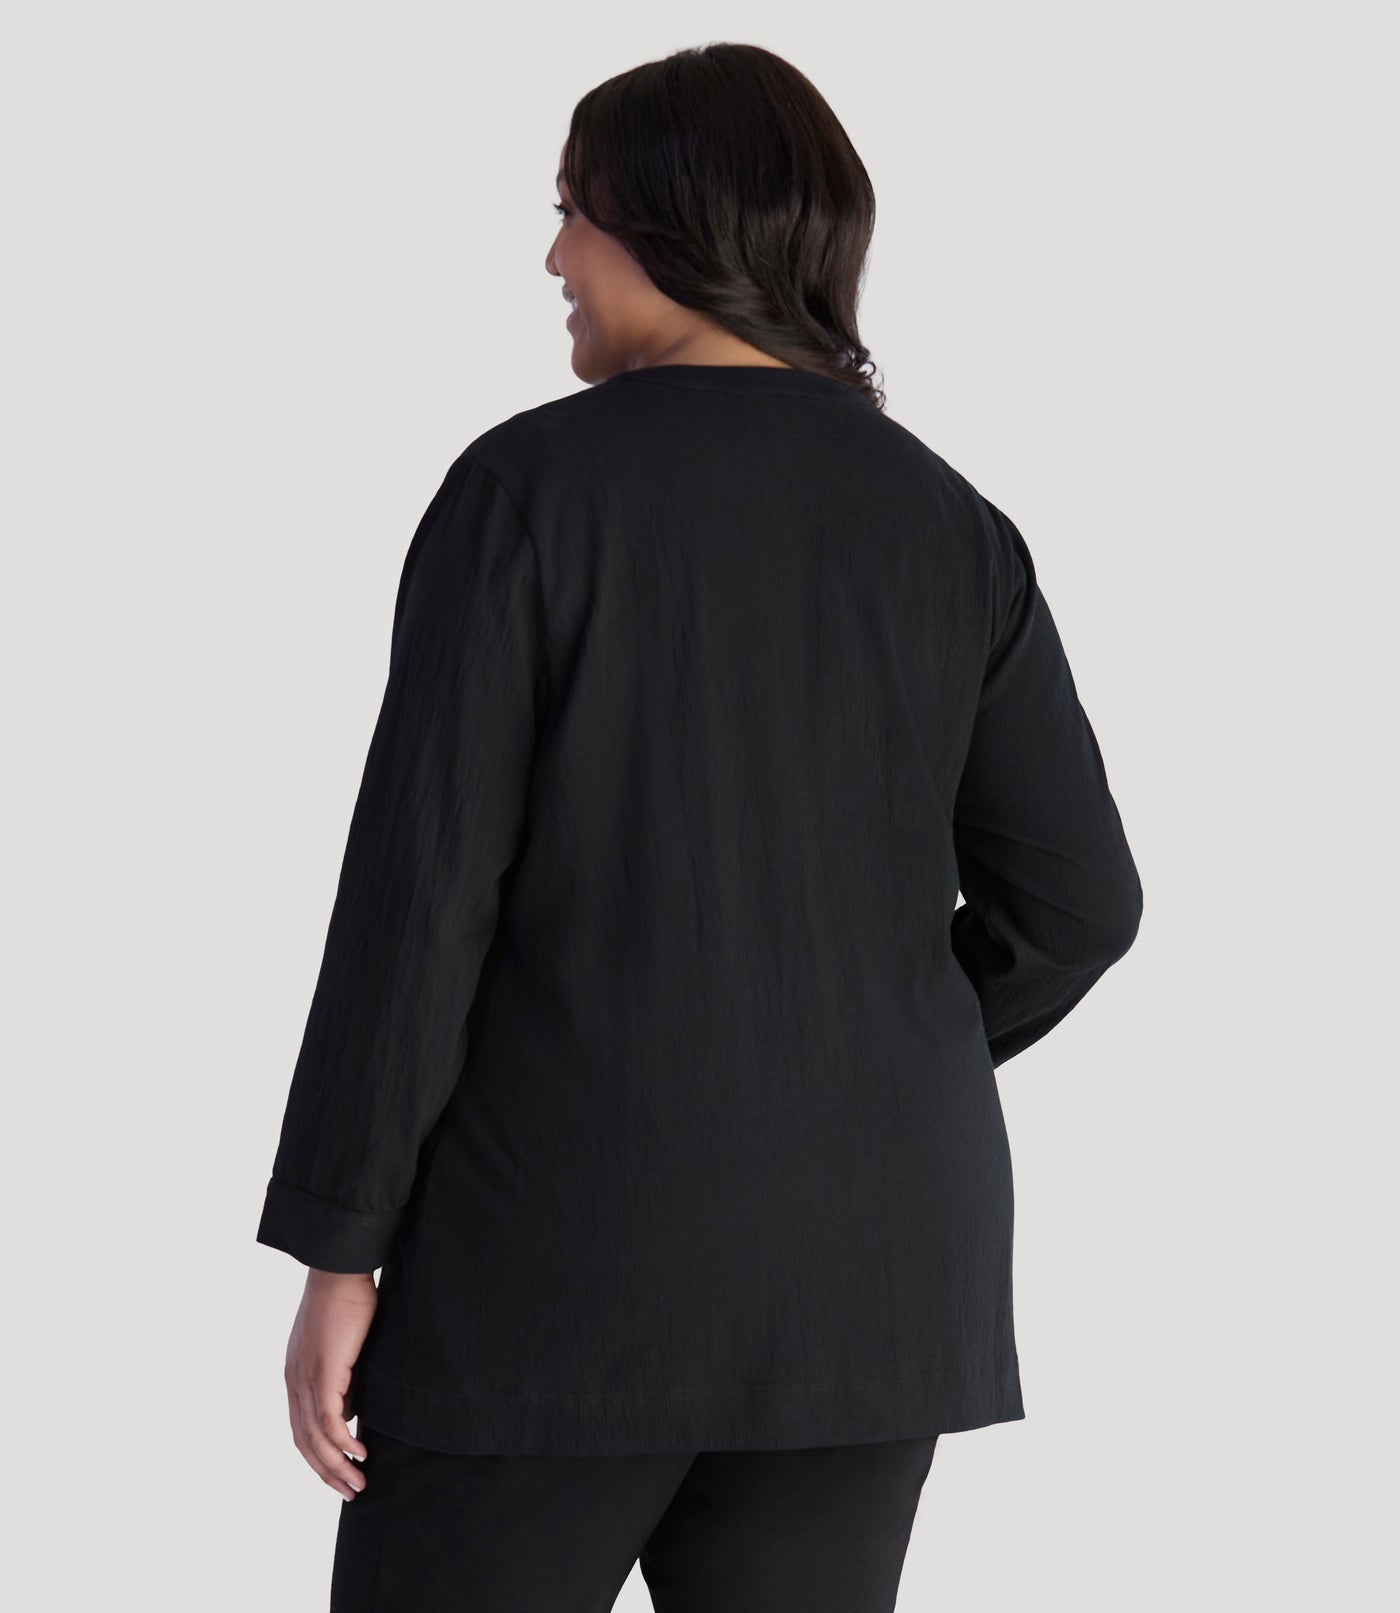 Model, facing back wearing JunoActive's Plus Size EZ Style Cotton Long Sleeve Pocket Jacket in color black.